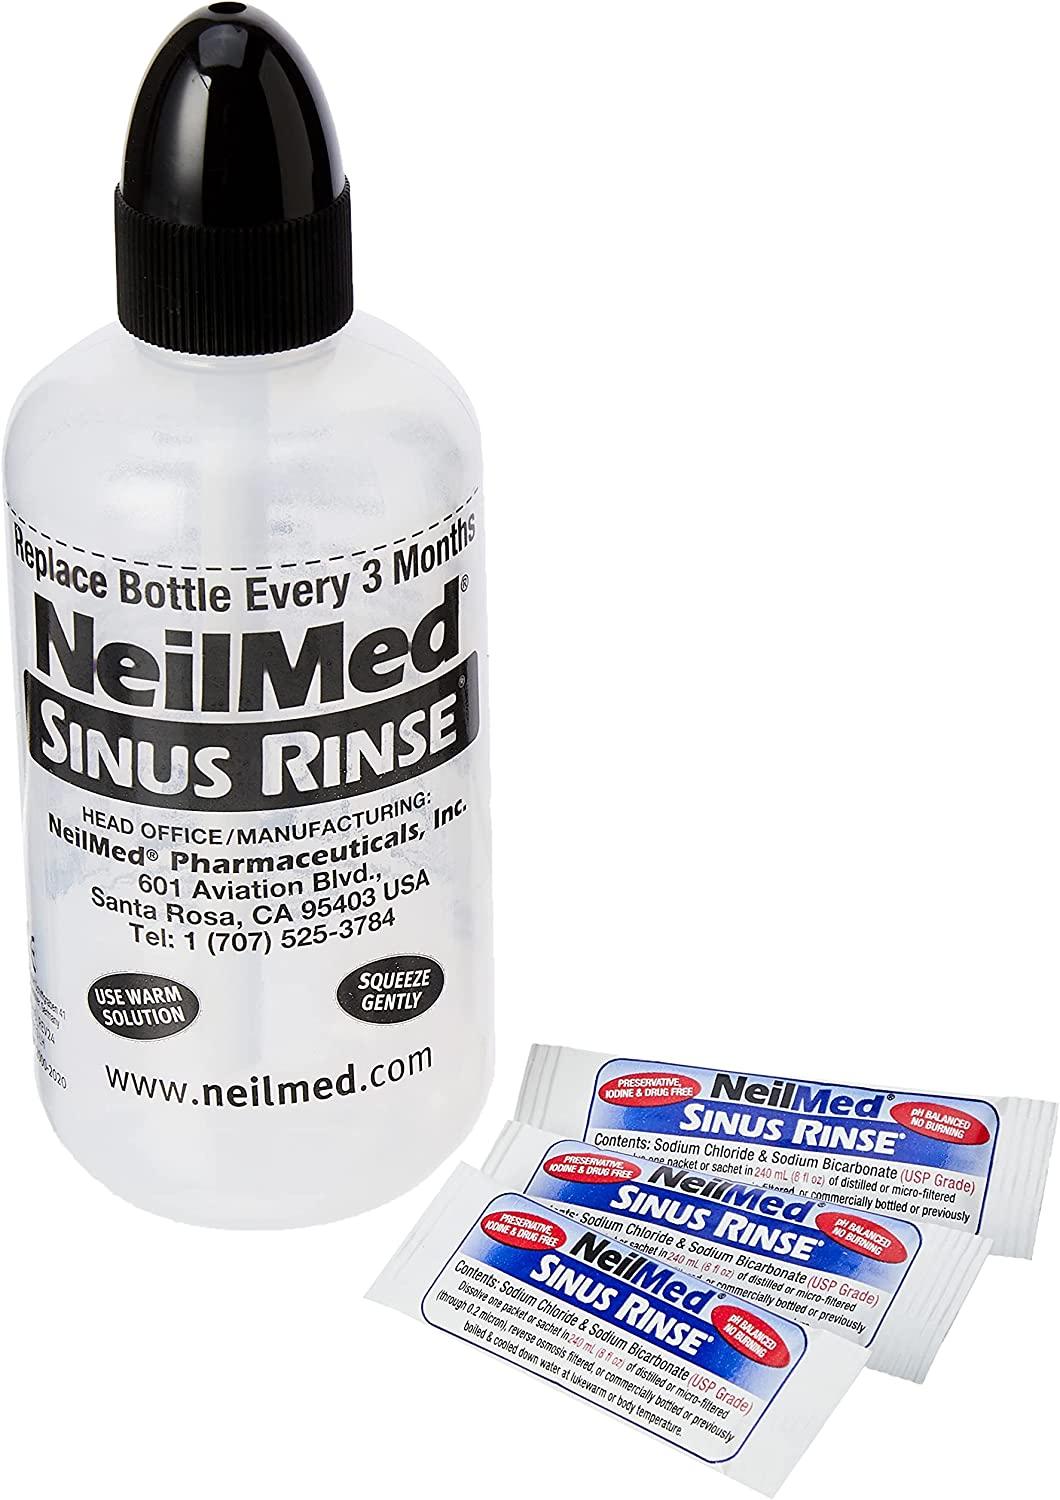 Neilmed Sinus Rinse Starter Kit (5 Packets) 5 Piece Set